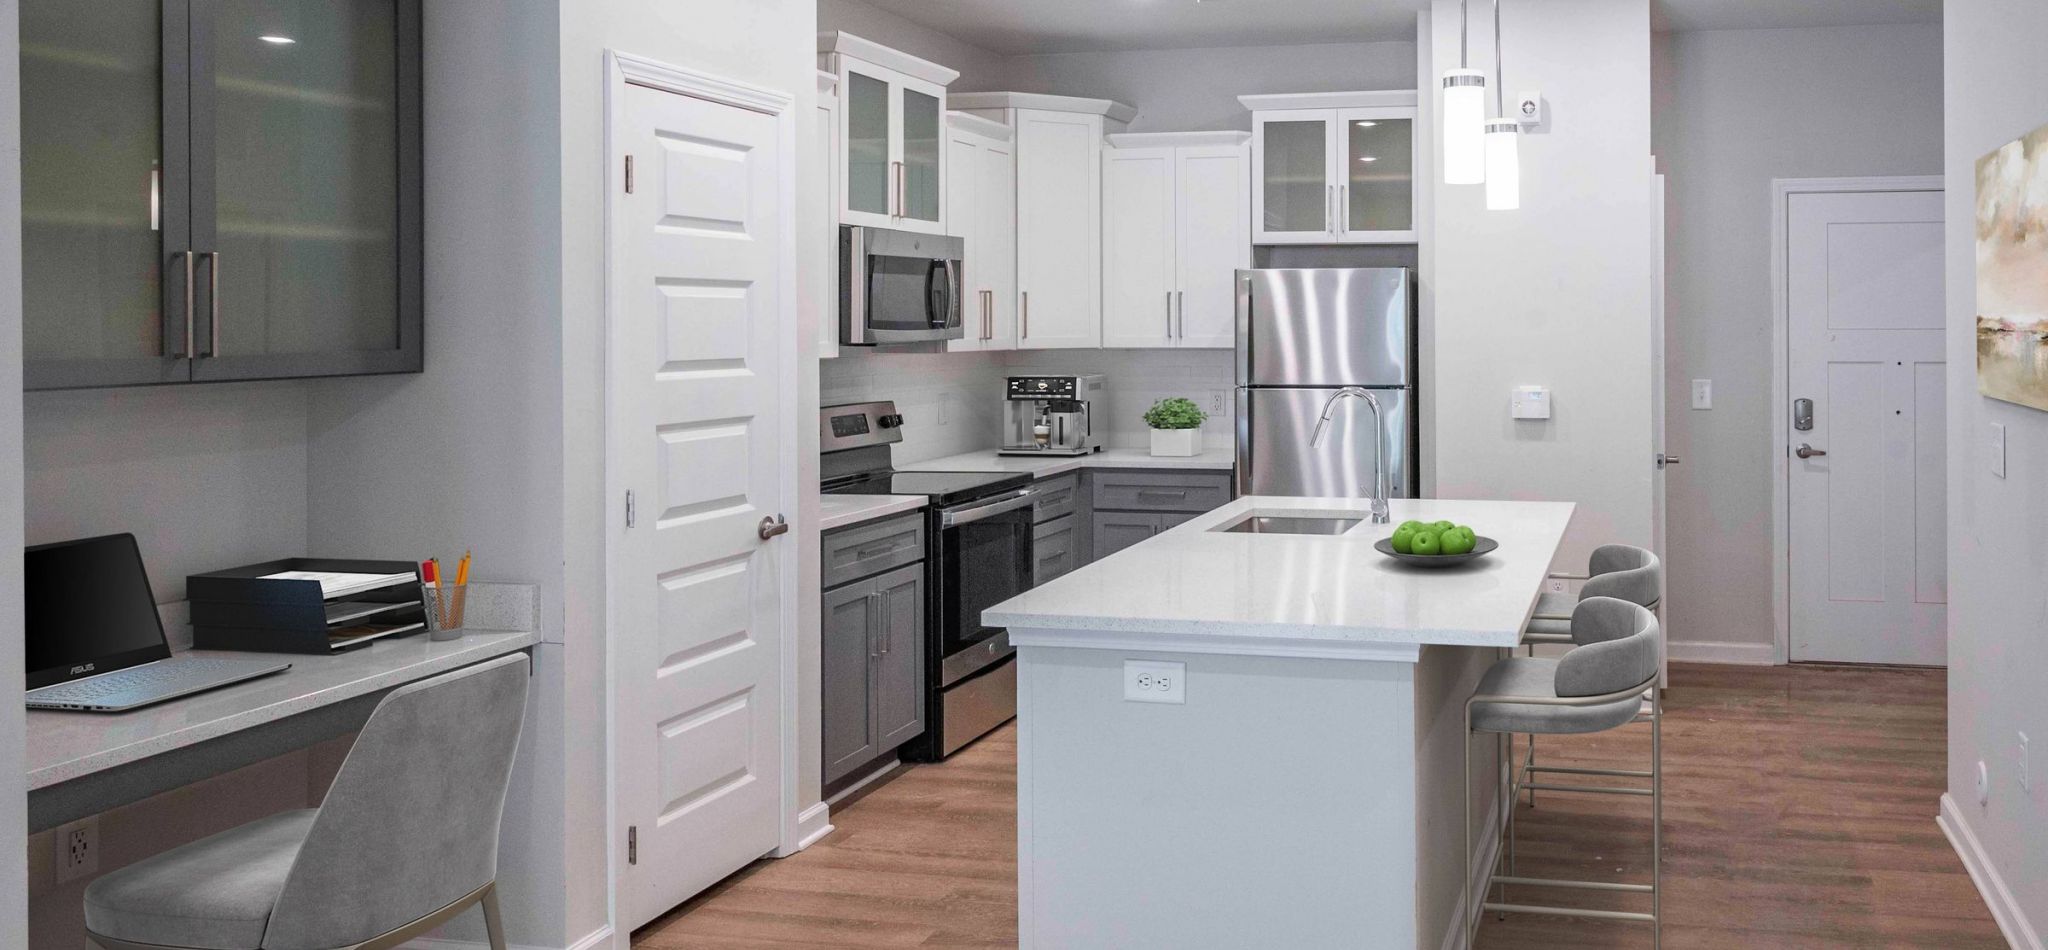 Hawthorne Waterside sleek kitchen workspace with grey cabinetry, built-in desk, and a minimalist, modern design.